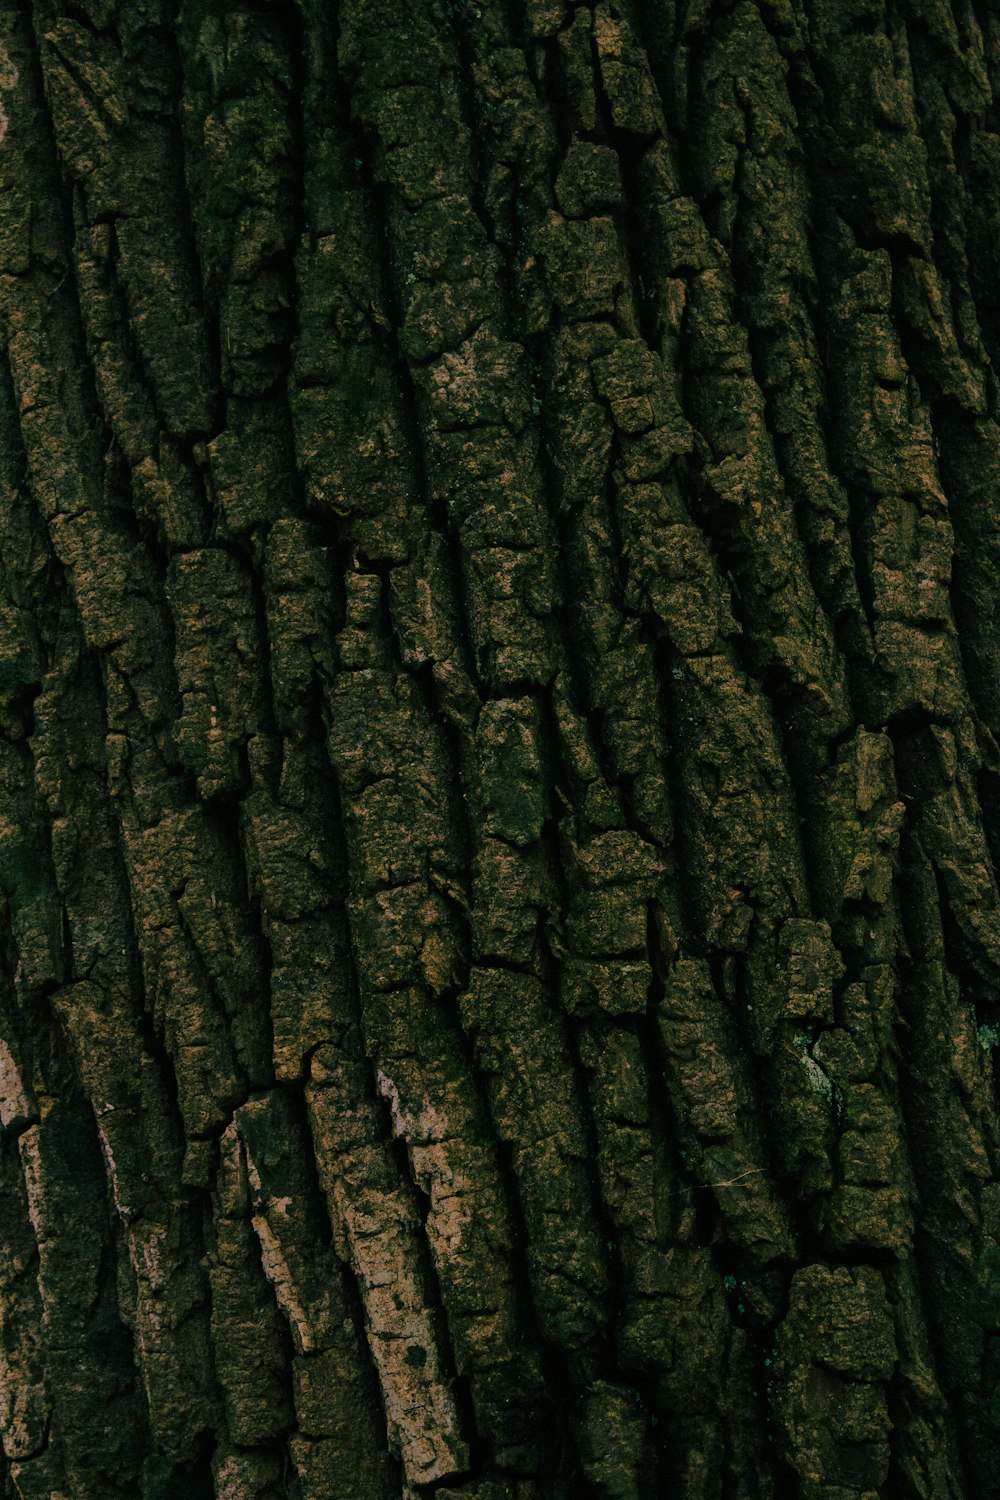 close view of tree bark